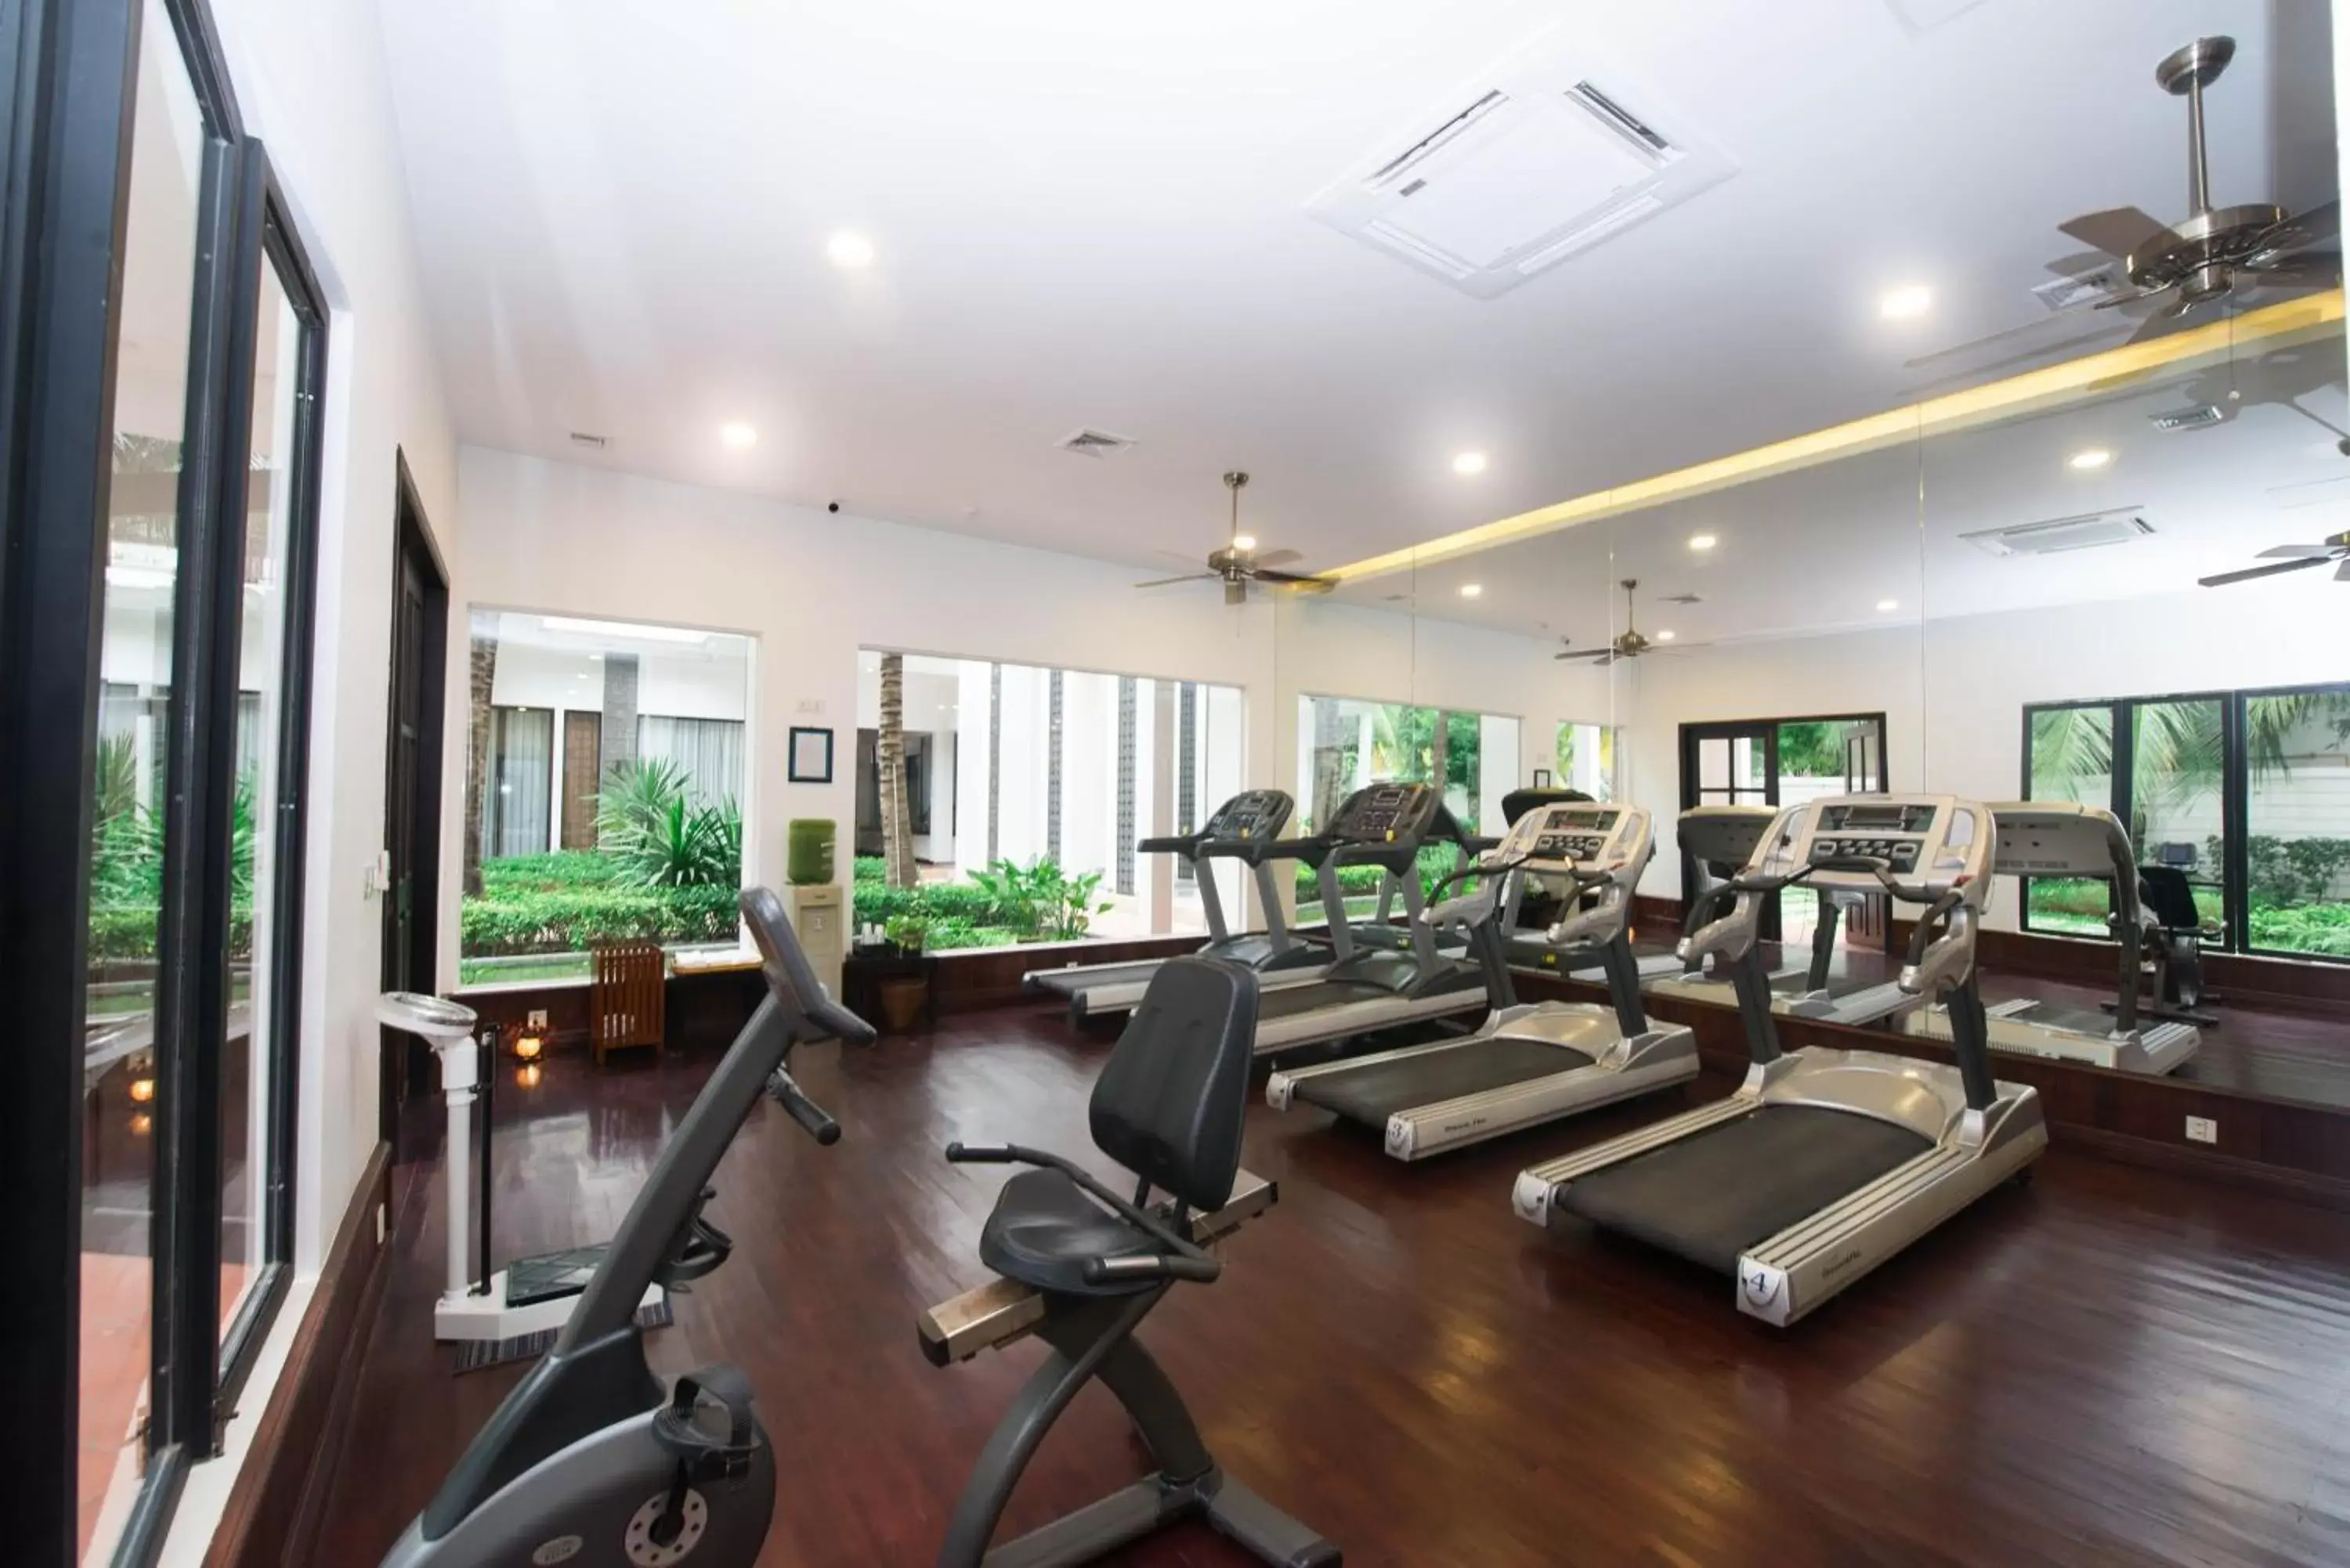 Fitness centre/facilities, Fitness Center/Facilities in Lotus Blanc Resort